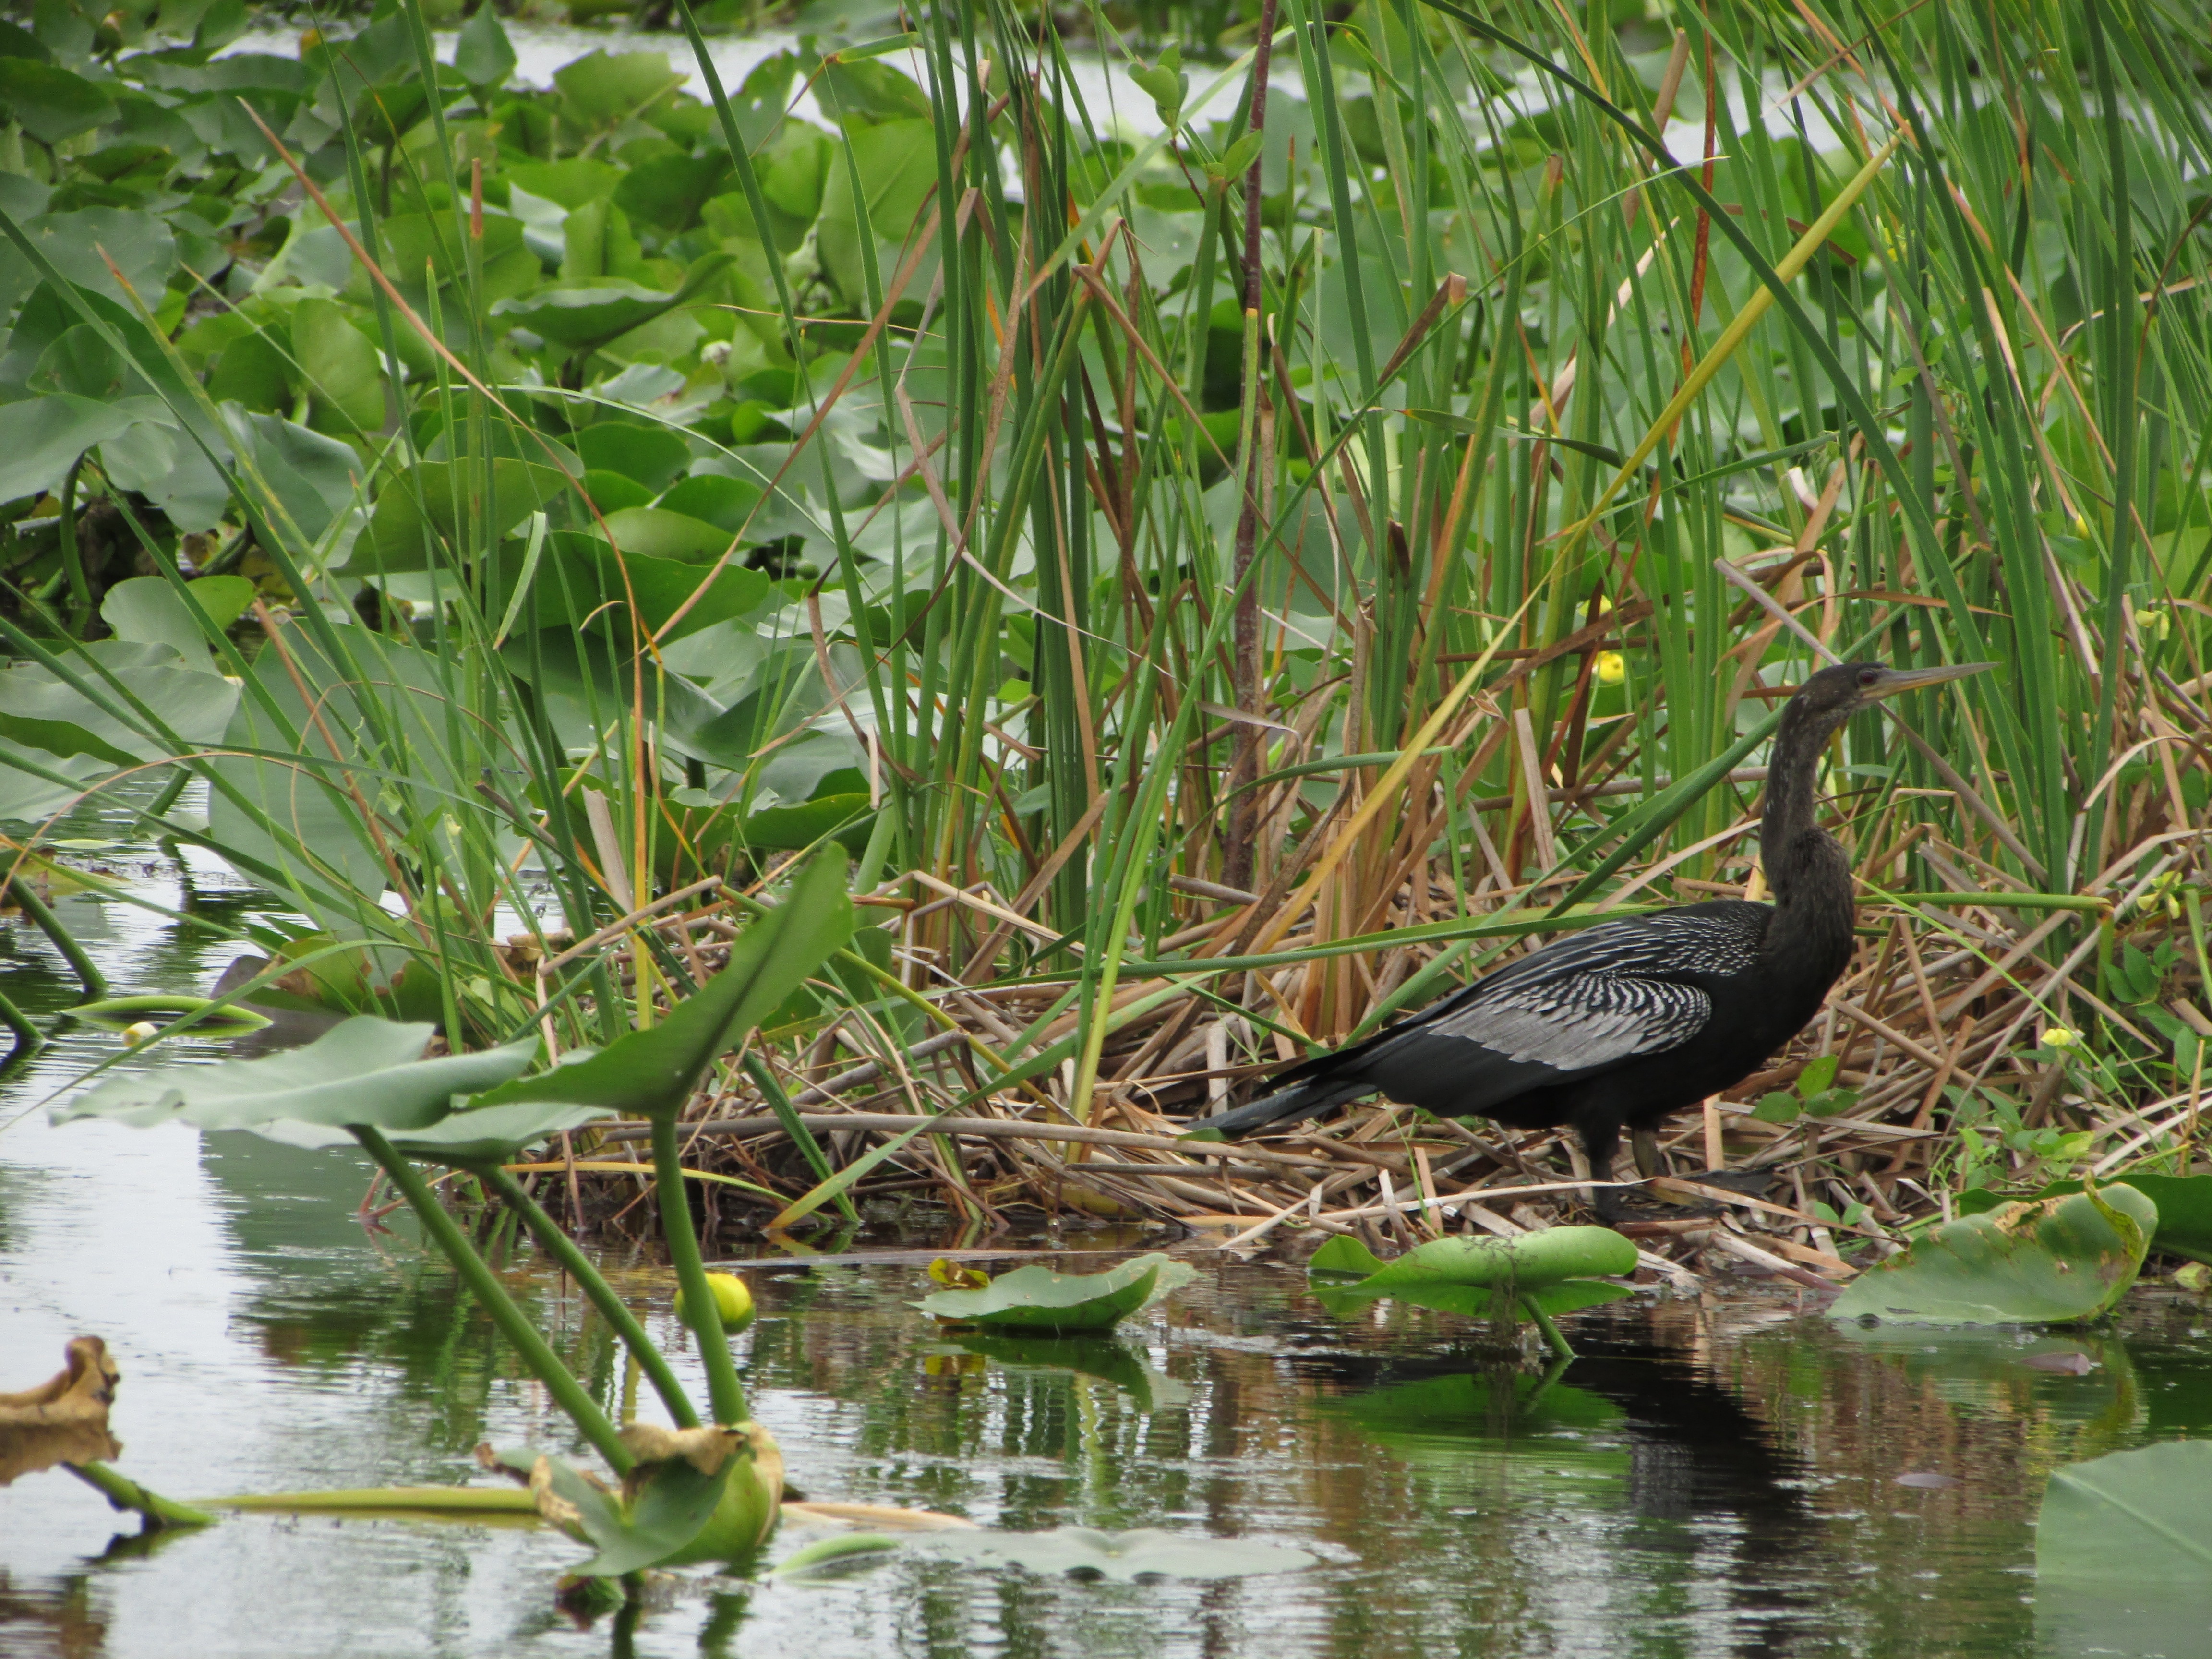 black feathered long necked bird